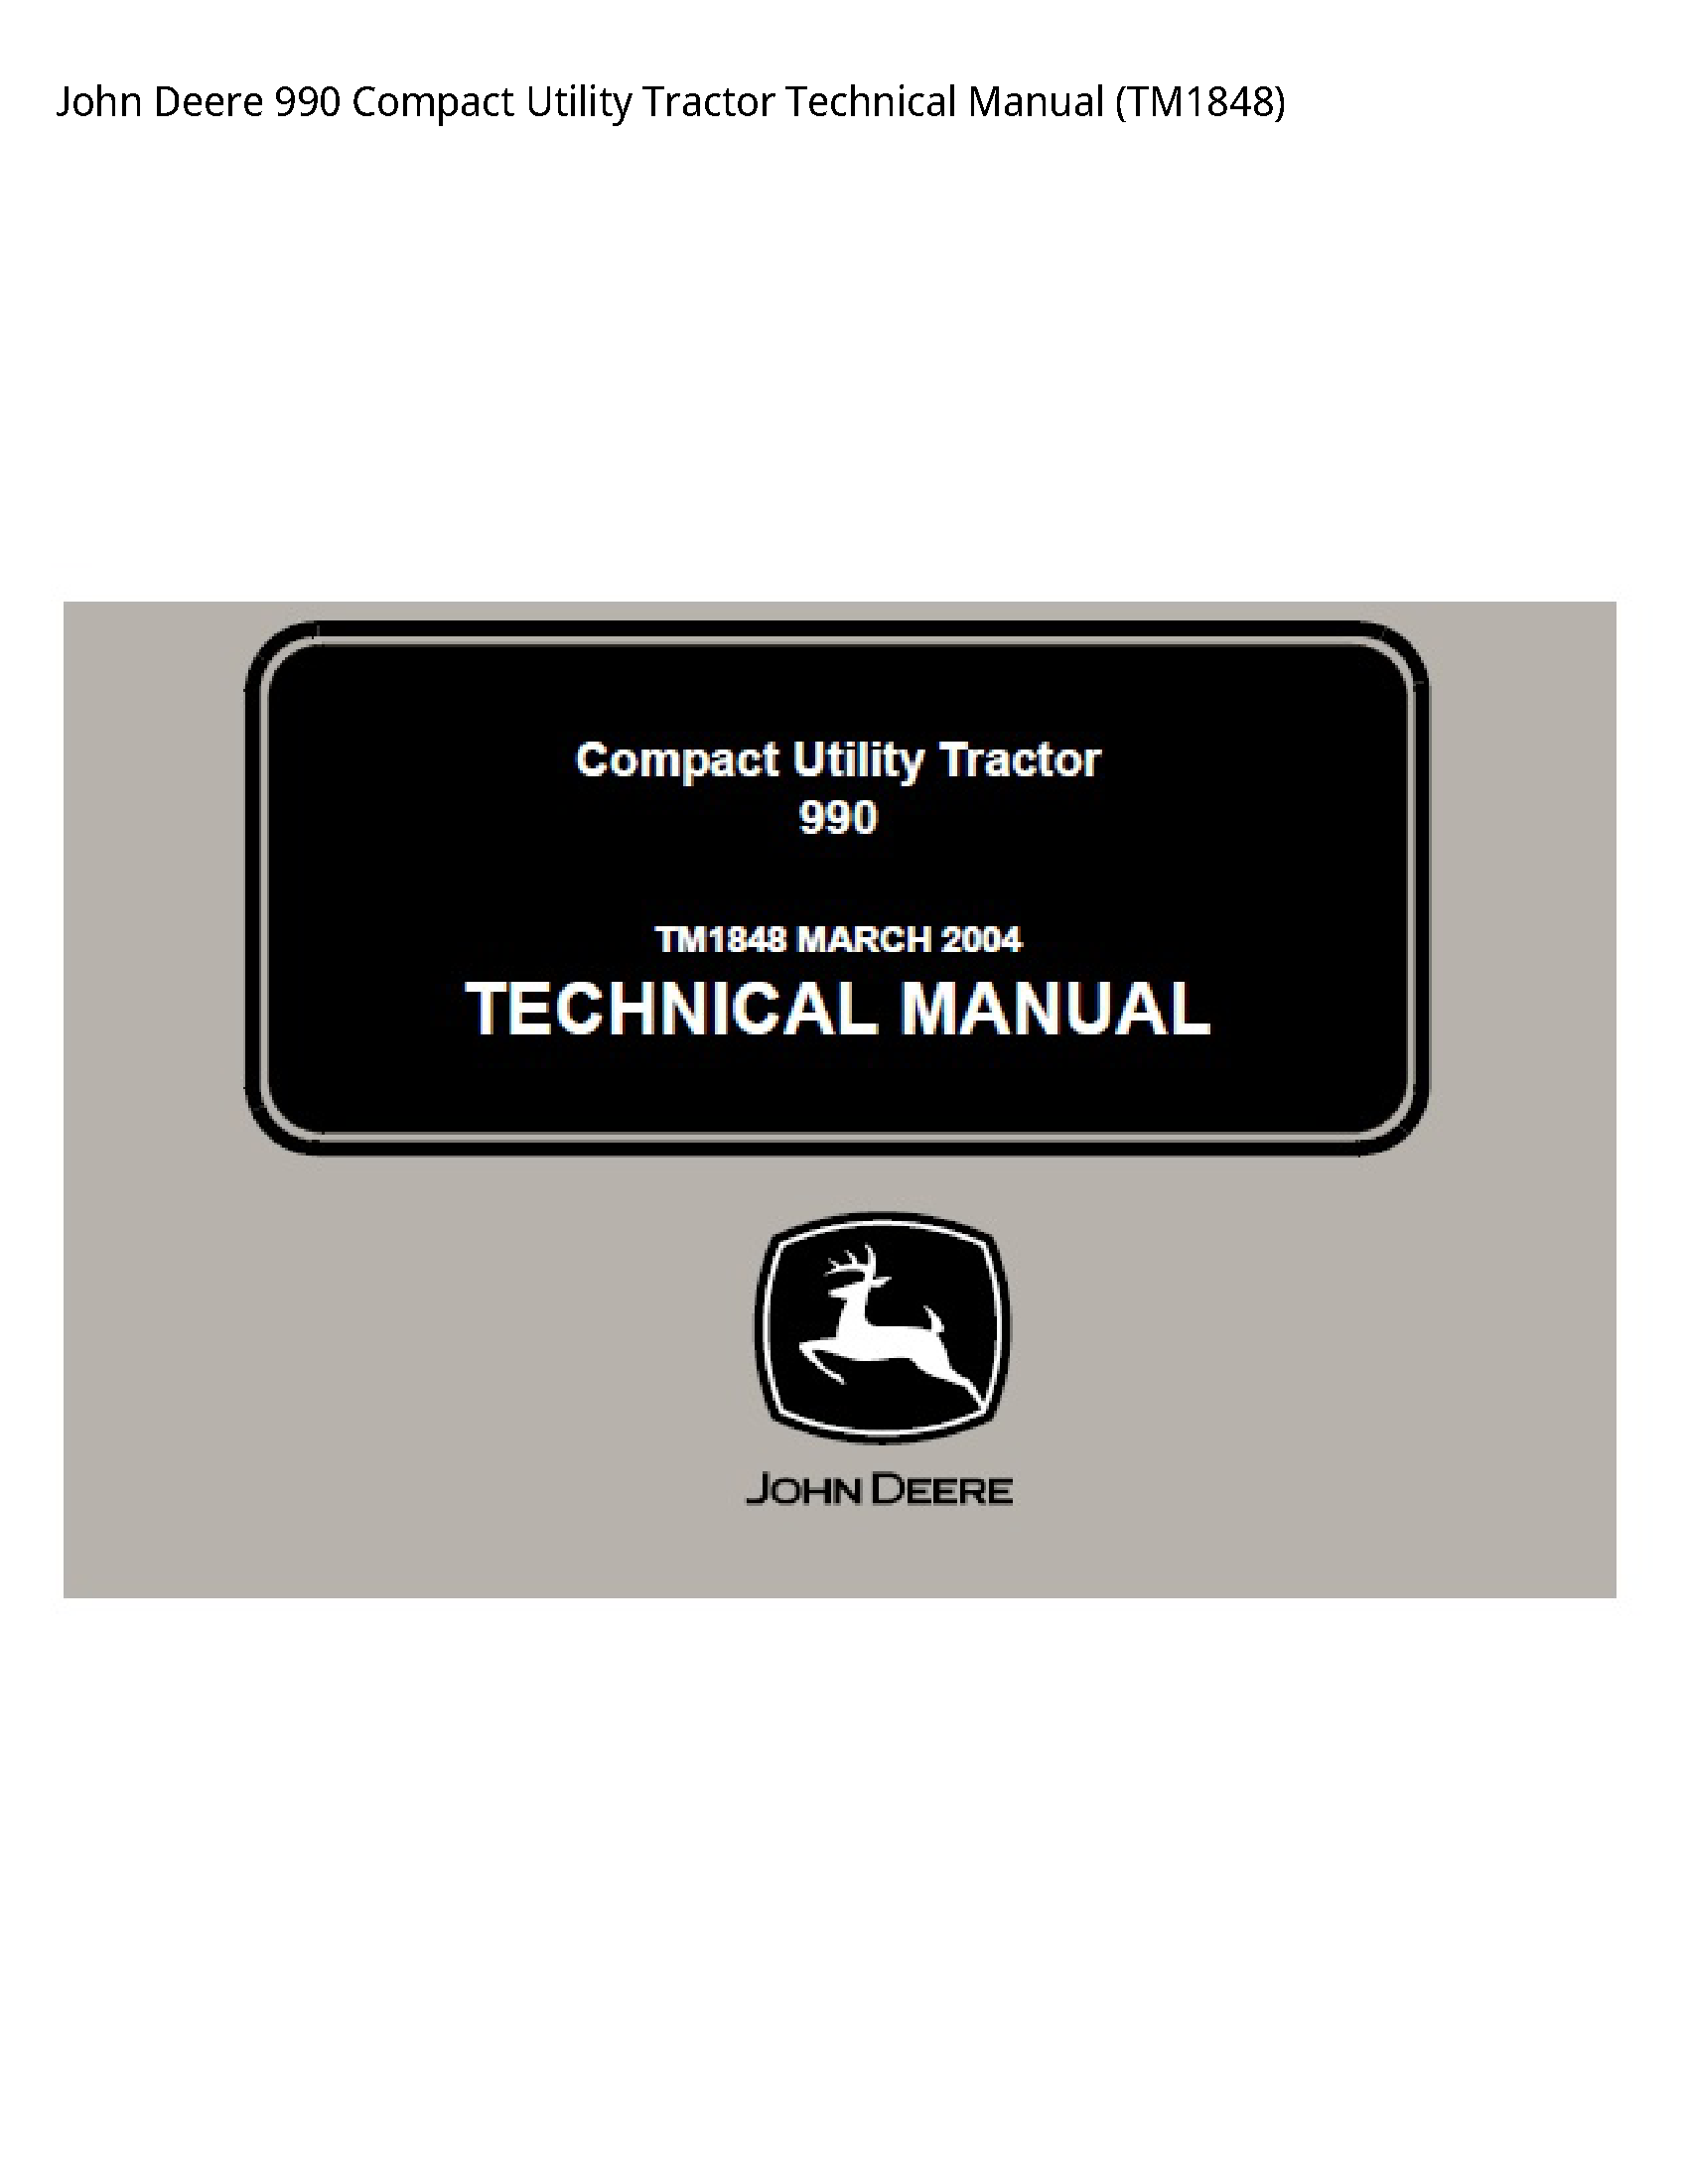 John Deere 990 Compact Utility Tractor Technical manual